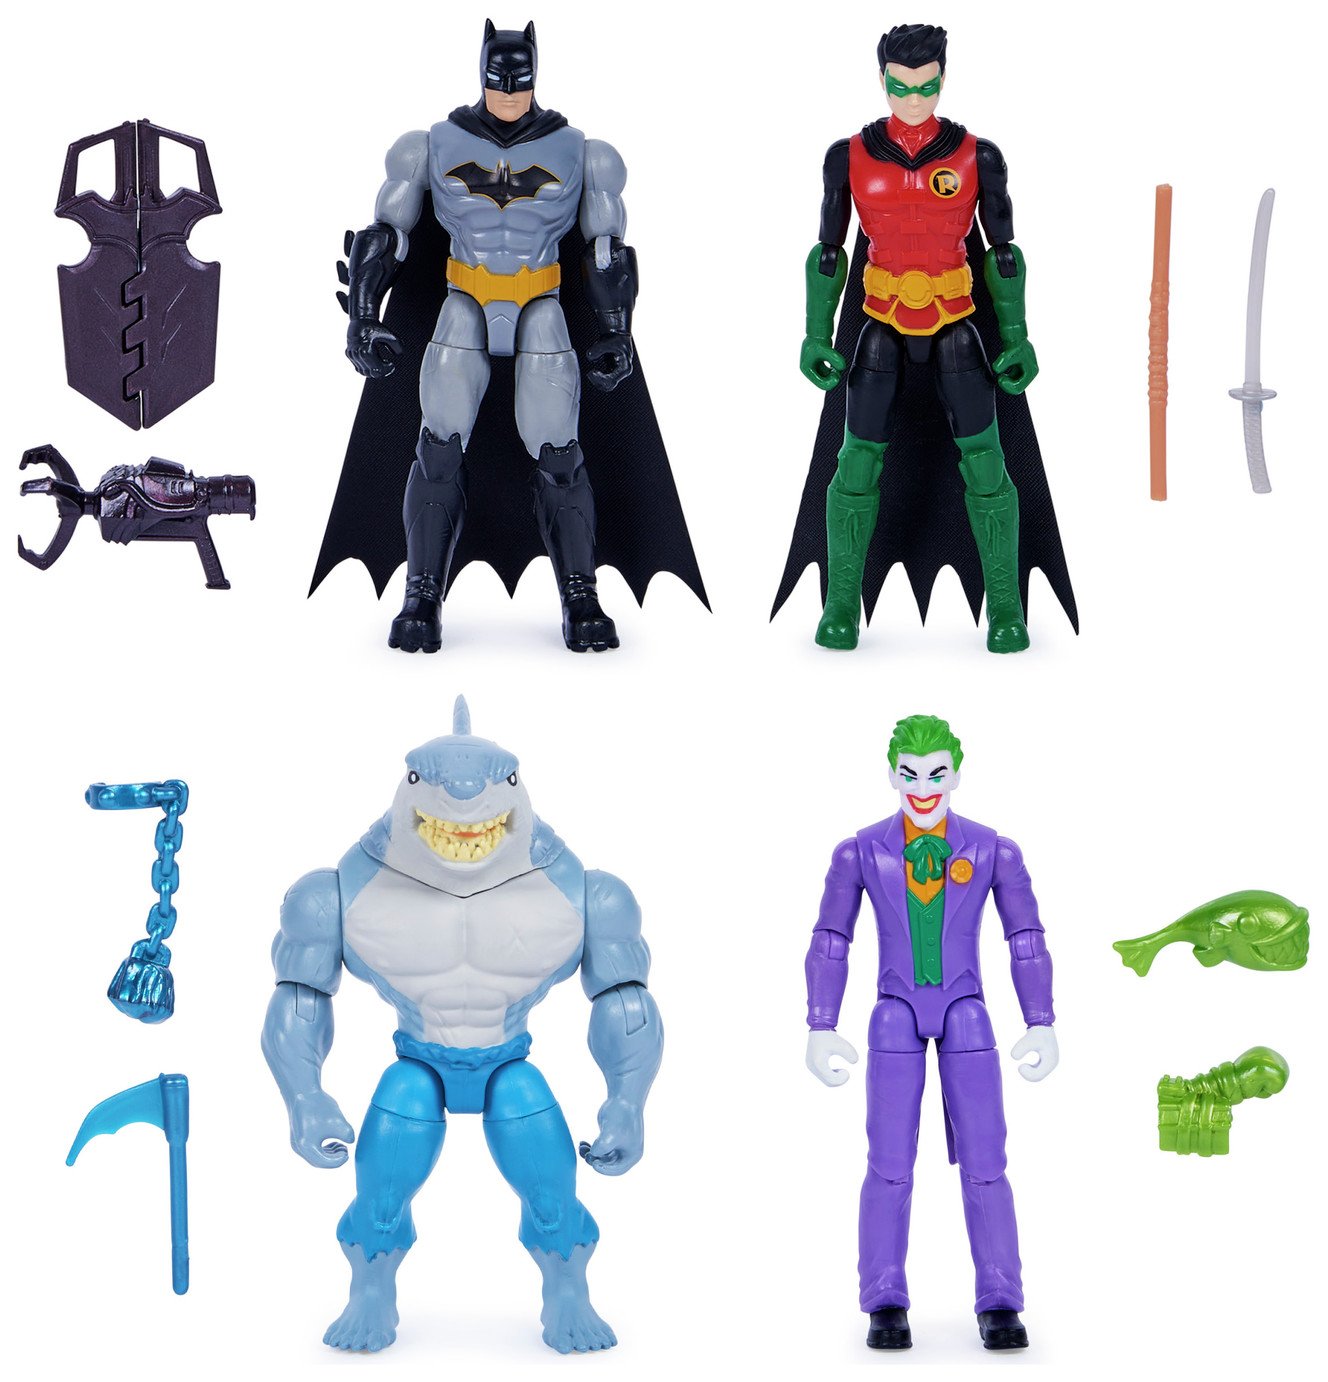 DC Comics Batman 4-inch Figure Pack of 4 review